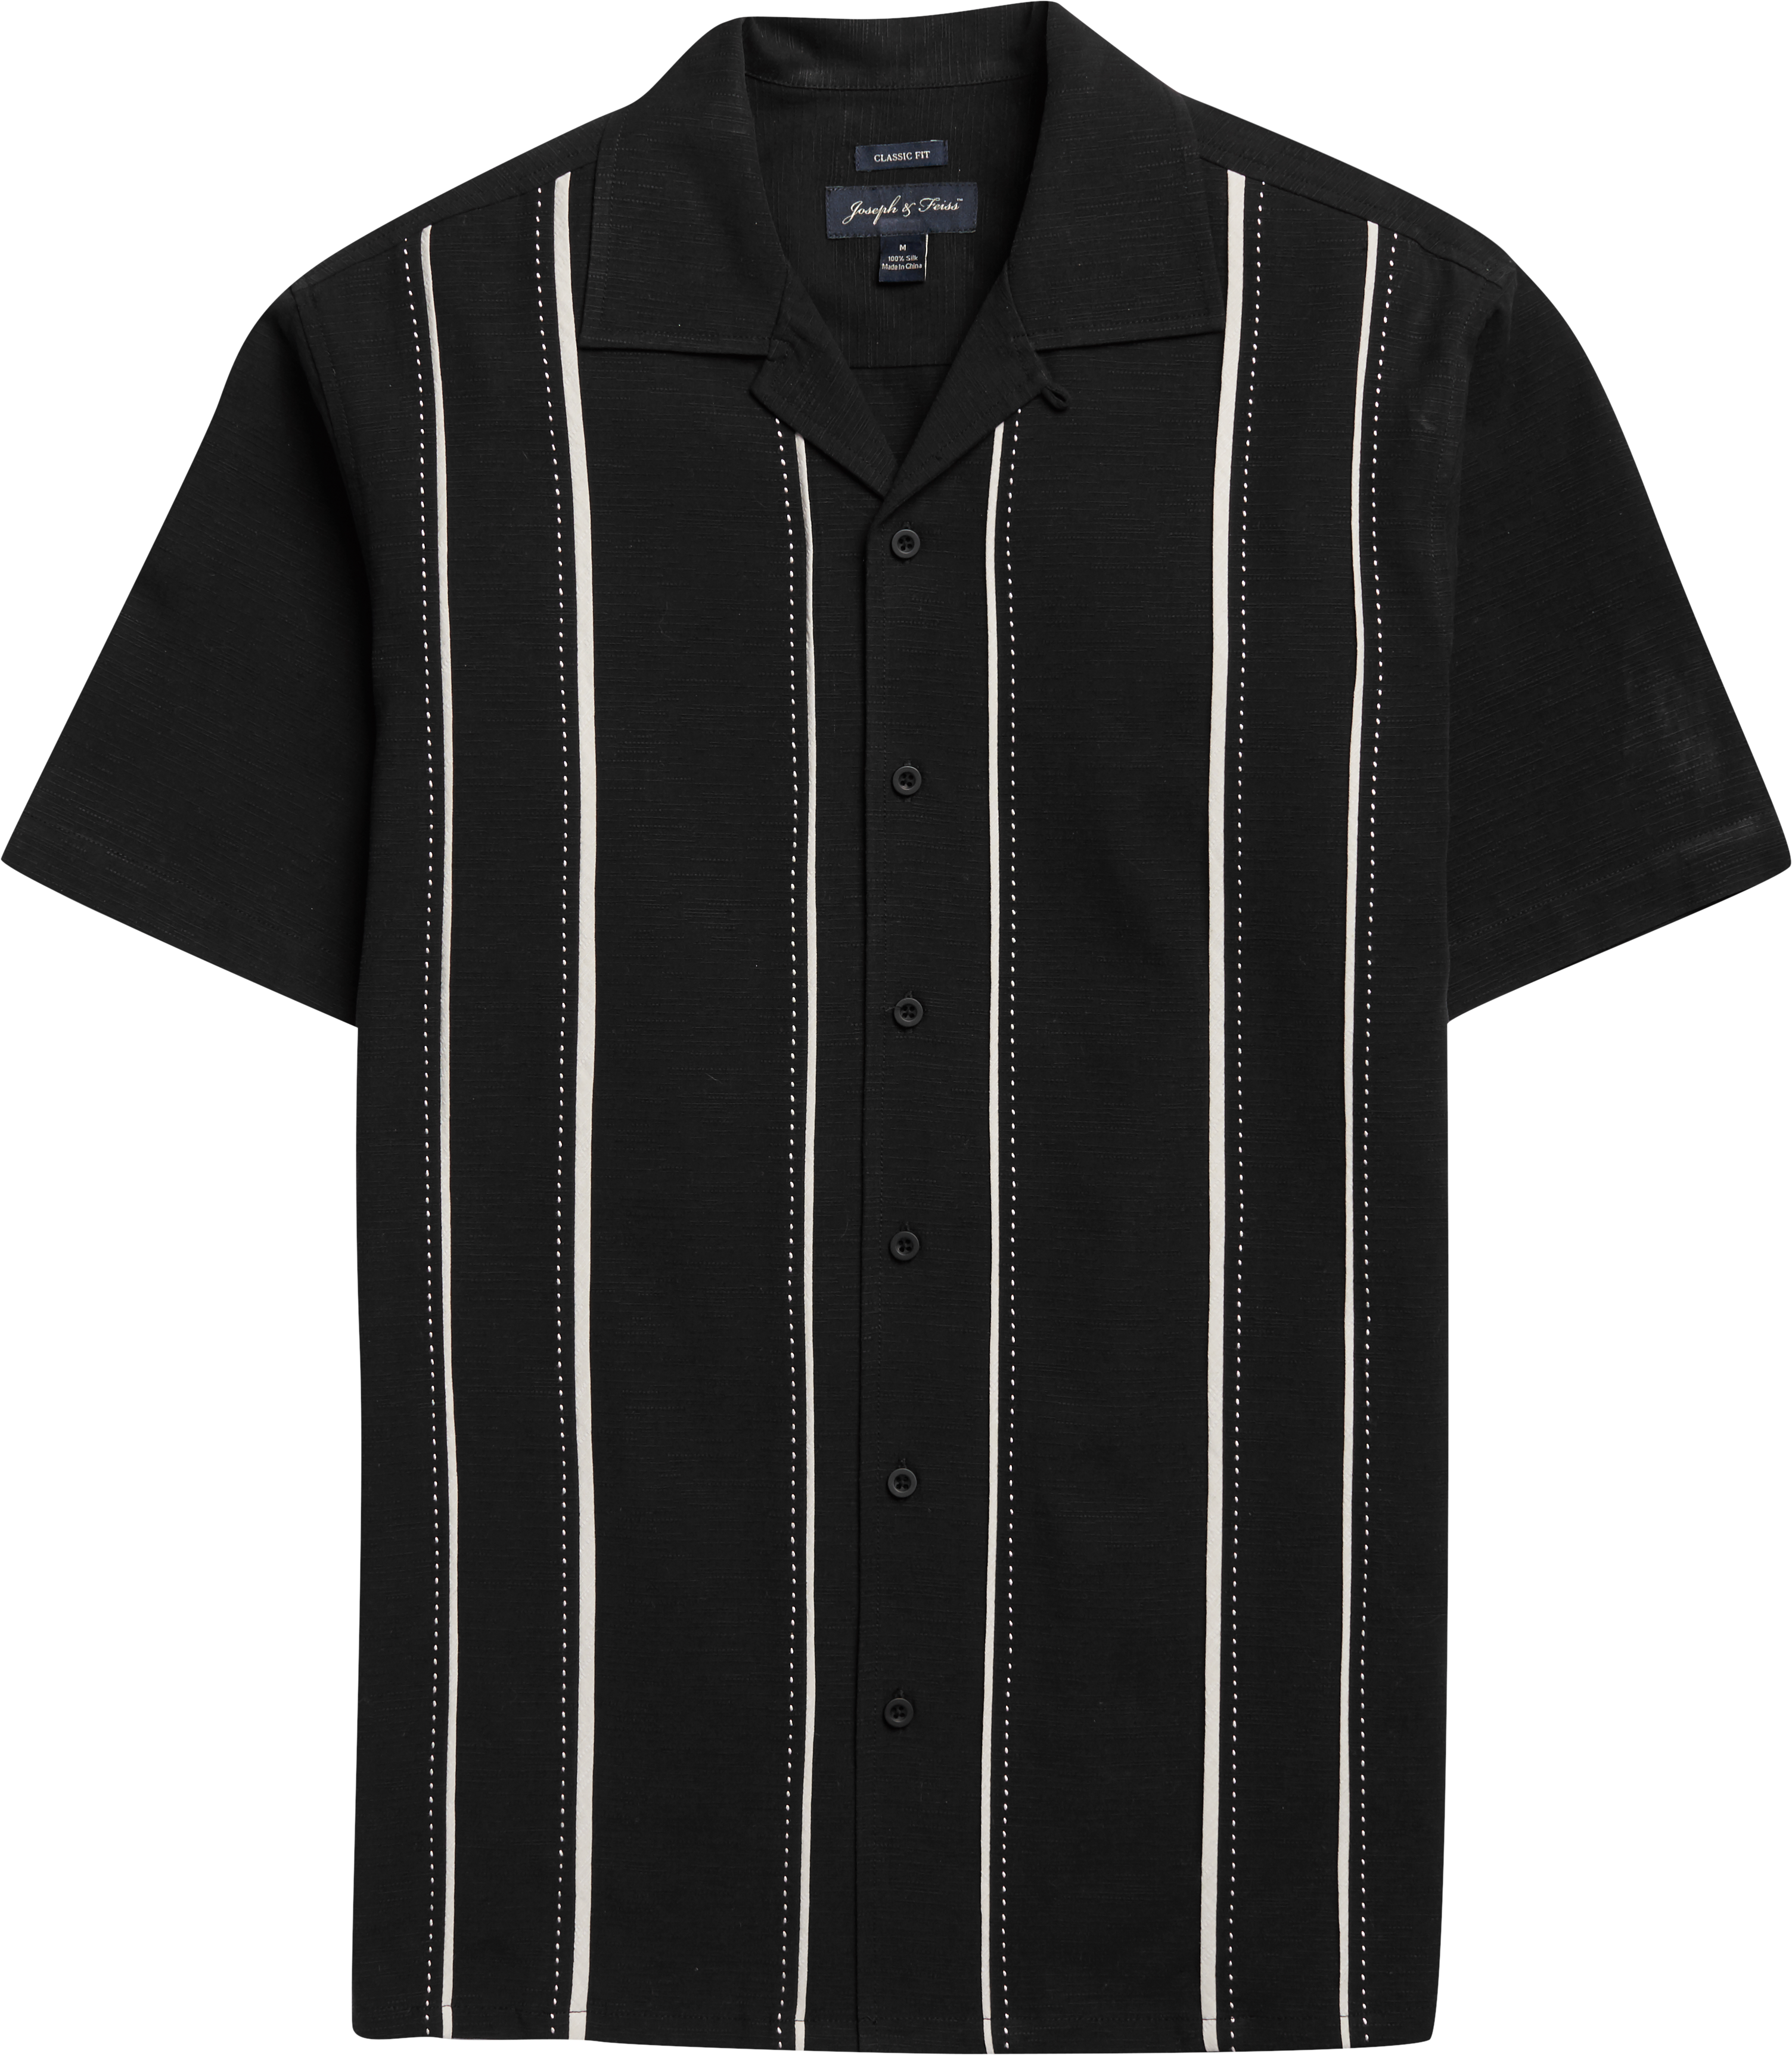 Joseph & Feiss Black & White Camp Shirt - Men's Sale | Men's Wearhouse